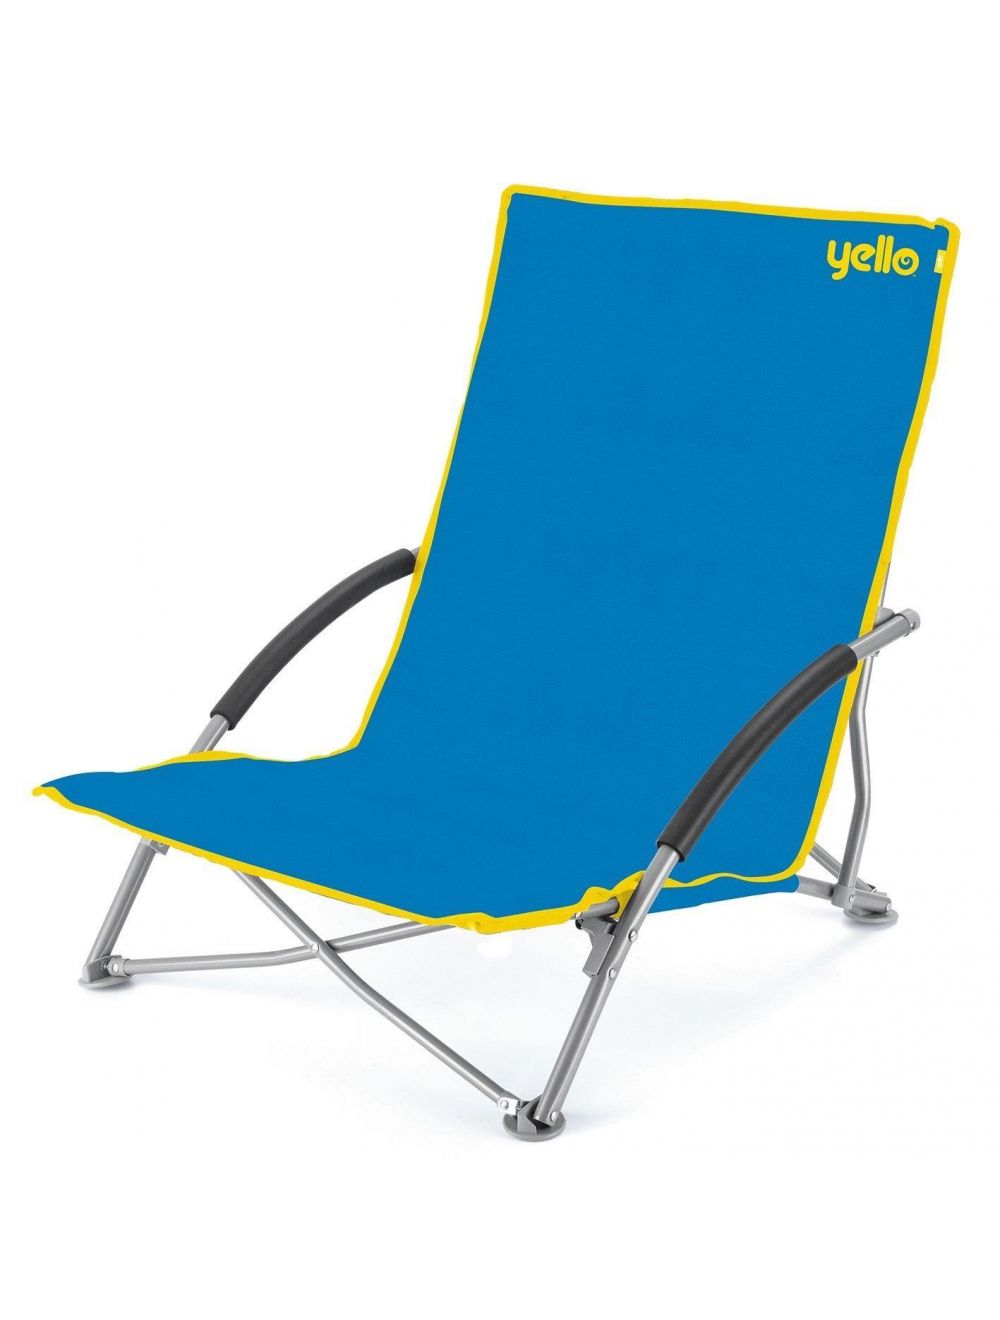 Yello Low Beach Folding Chair